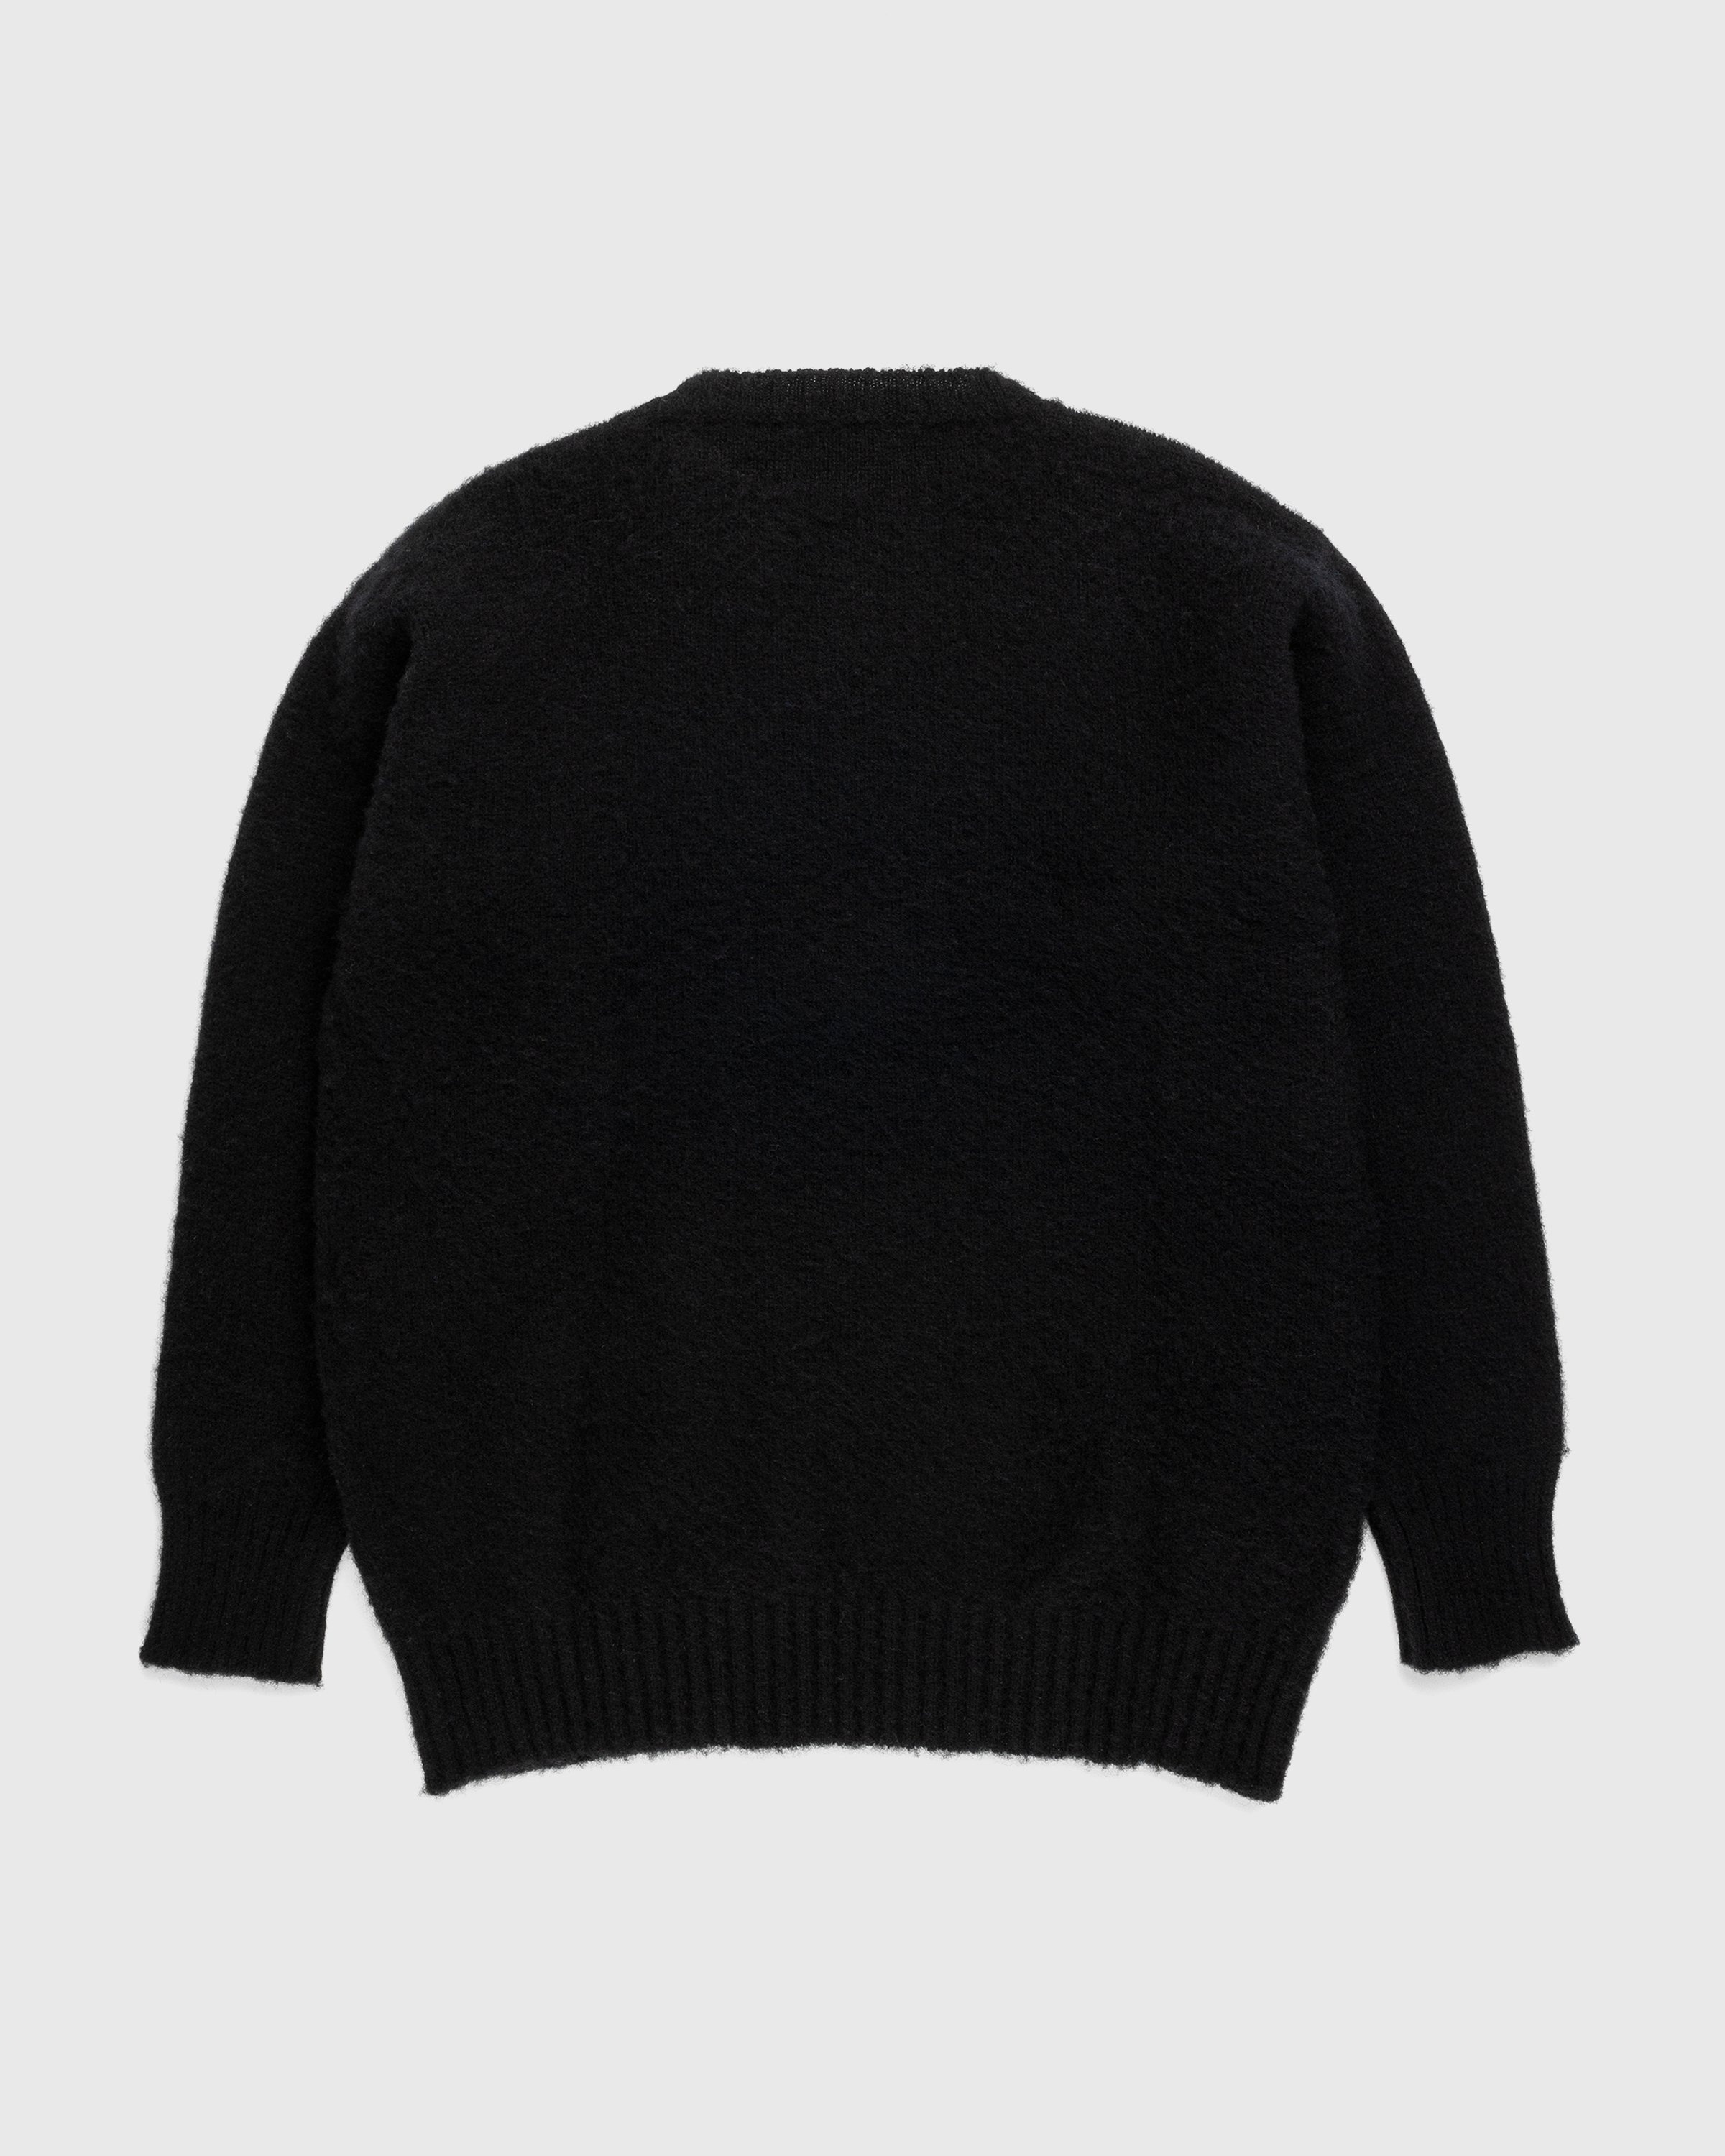 J. Press x Highsnobiety – Shaggy Dog Solid Sweater Black - Crewnecks - Black - Image 2